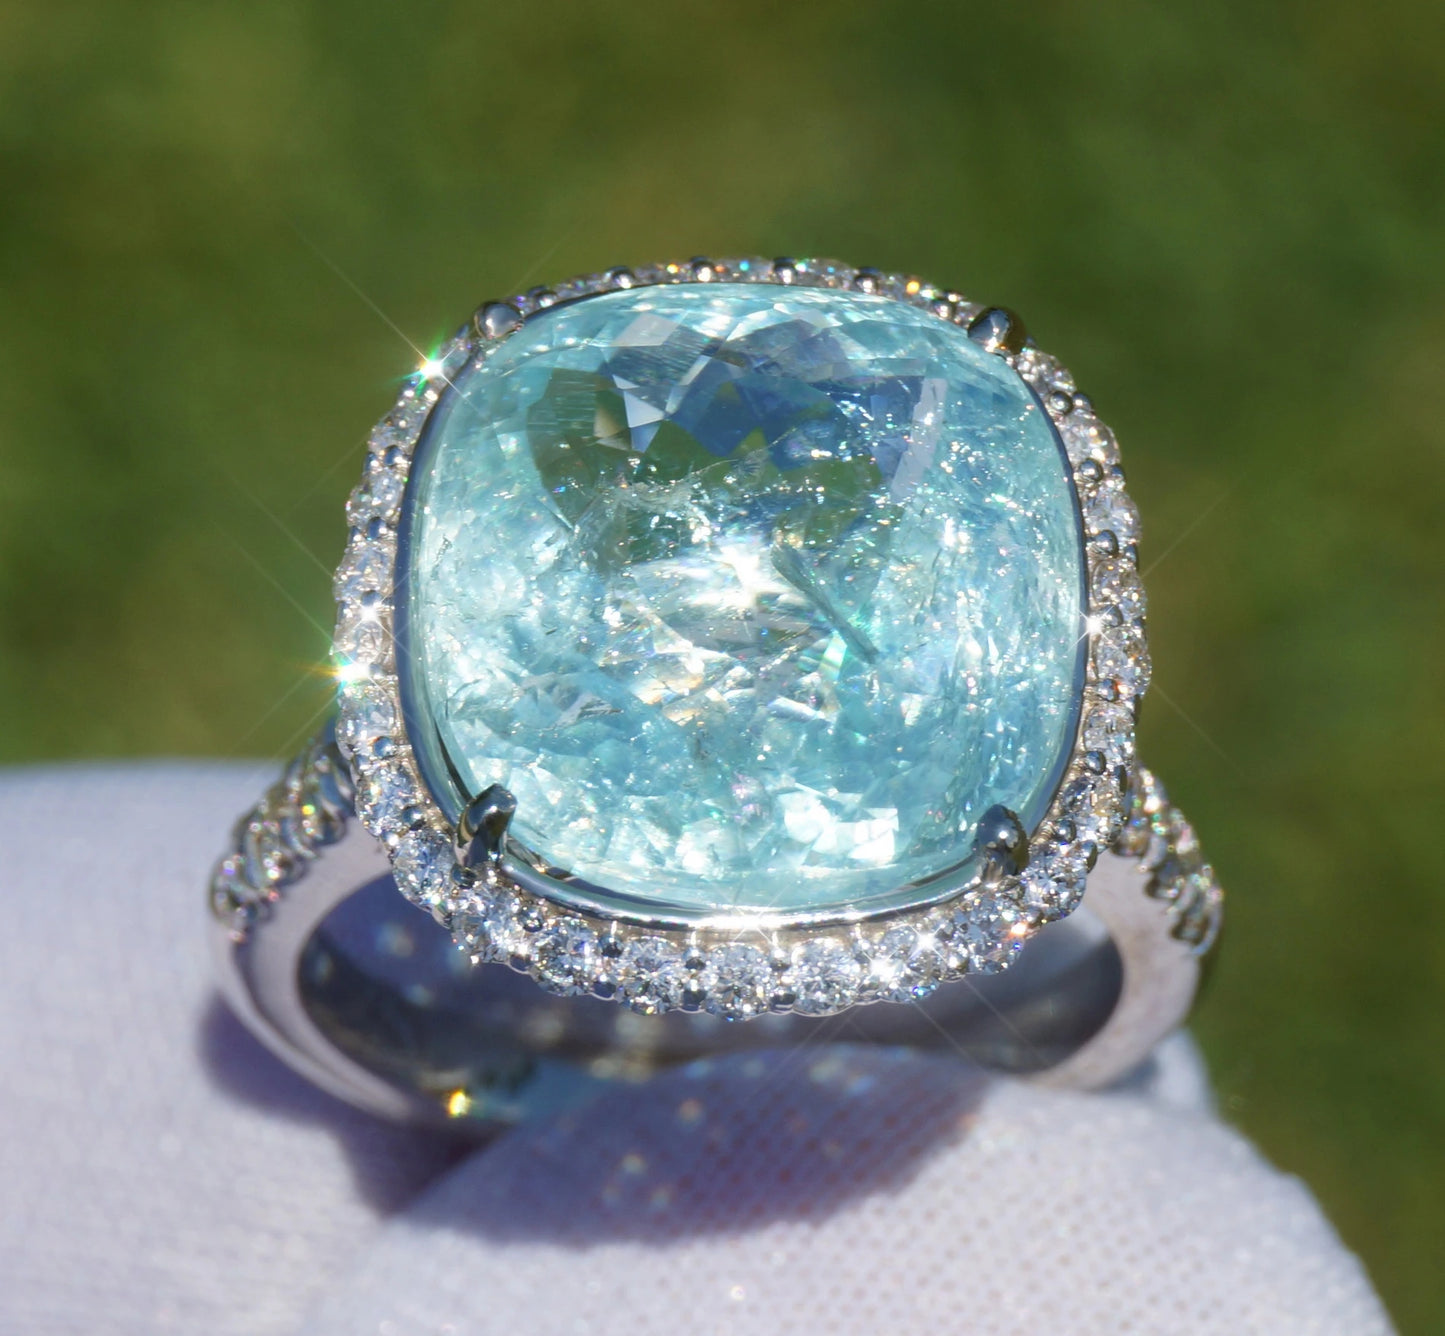 Paraiba tourmaline copper bearing ring gold 14k diamond 10.50ctw gia certified cushion blue